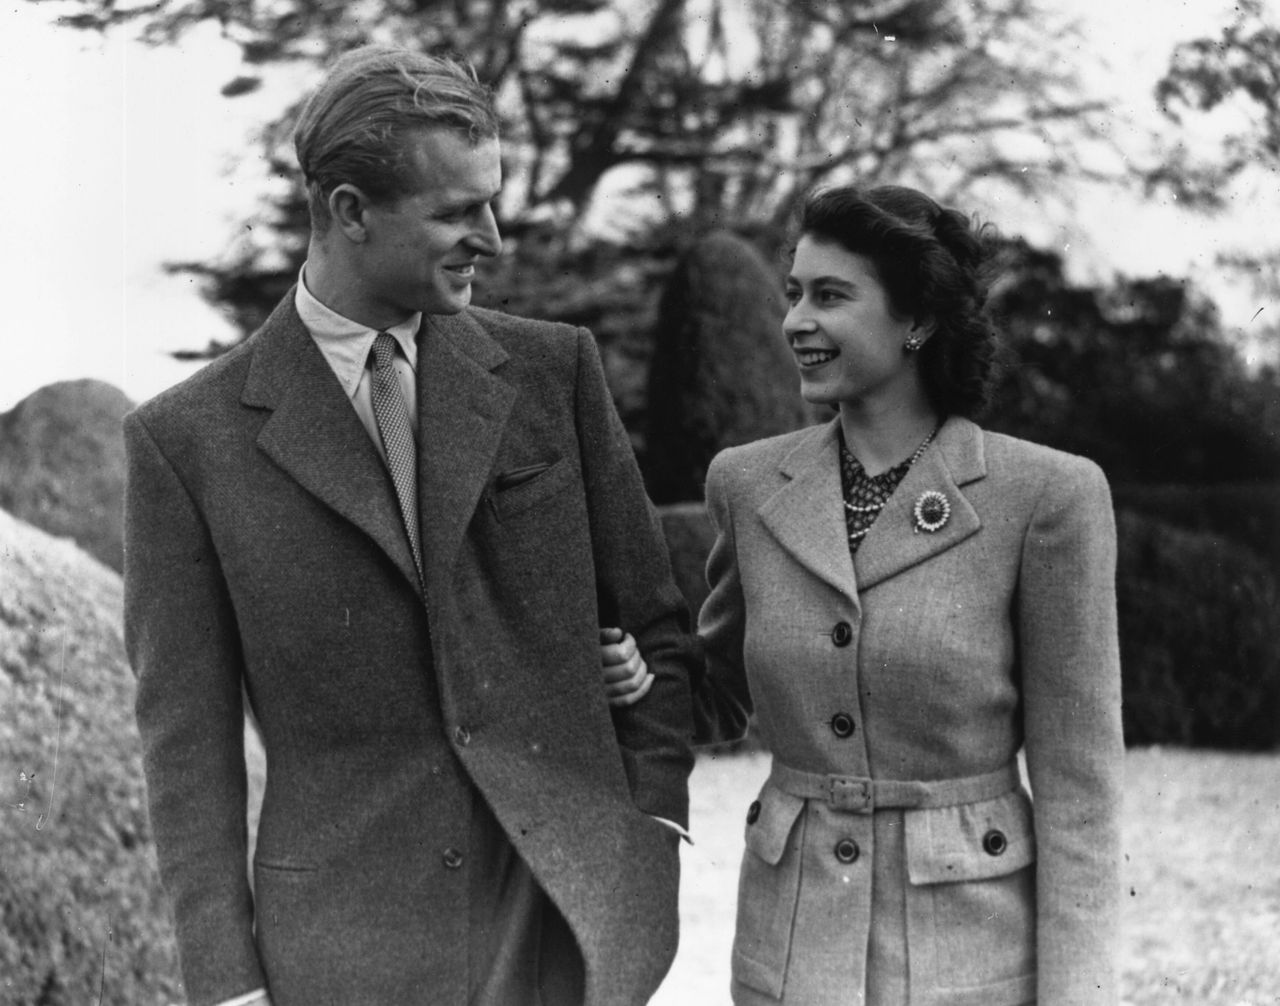 Princess Elizabeth and The Prince Philip, Duke of Edinburgh during their honeymoon in 1947.